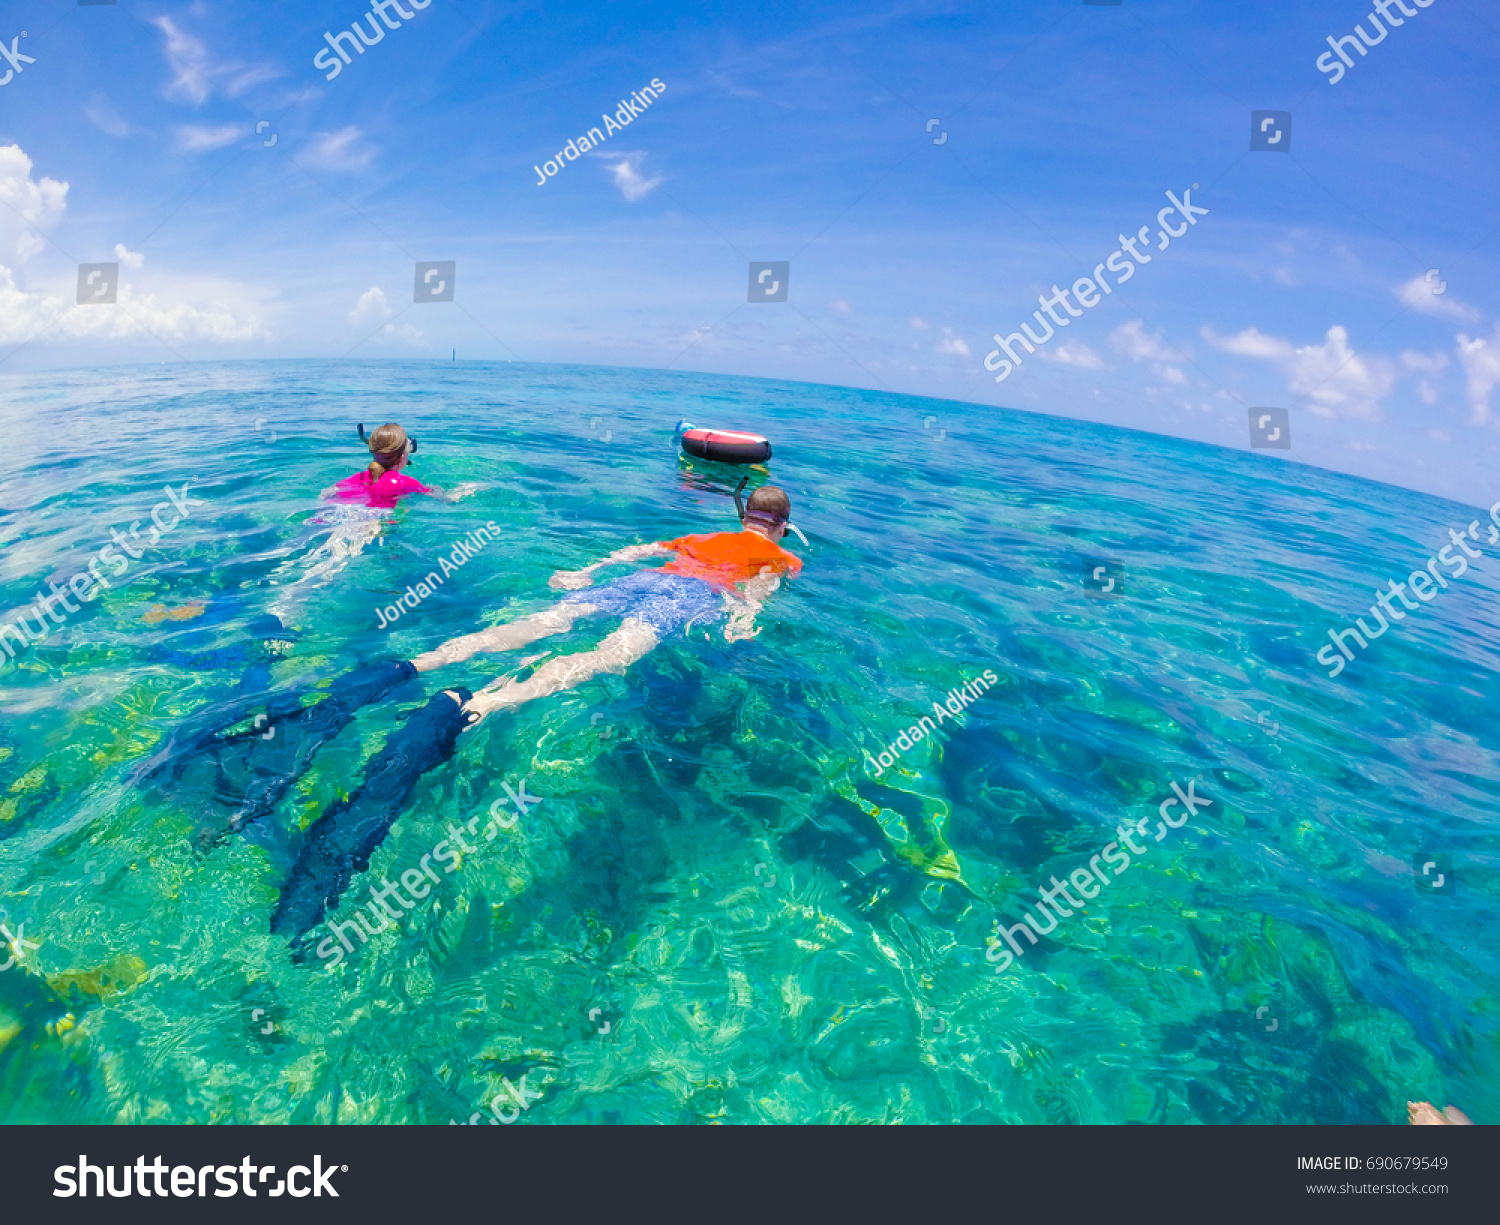 Snorkelling in Key West - Florida Marine Sanctuary  #690679549